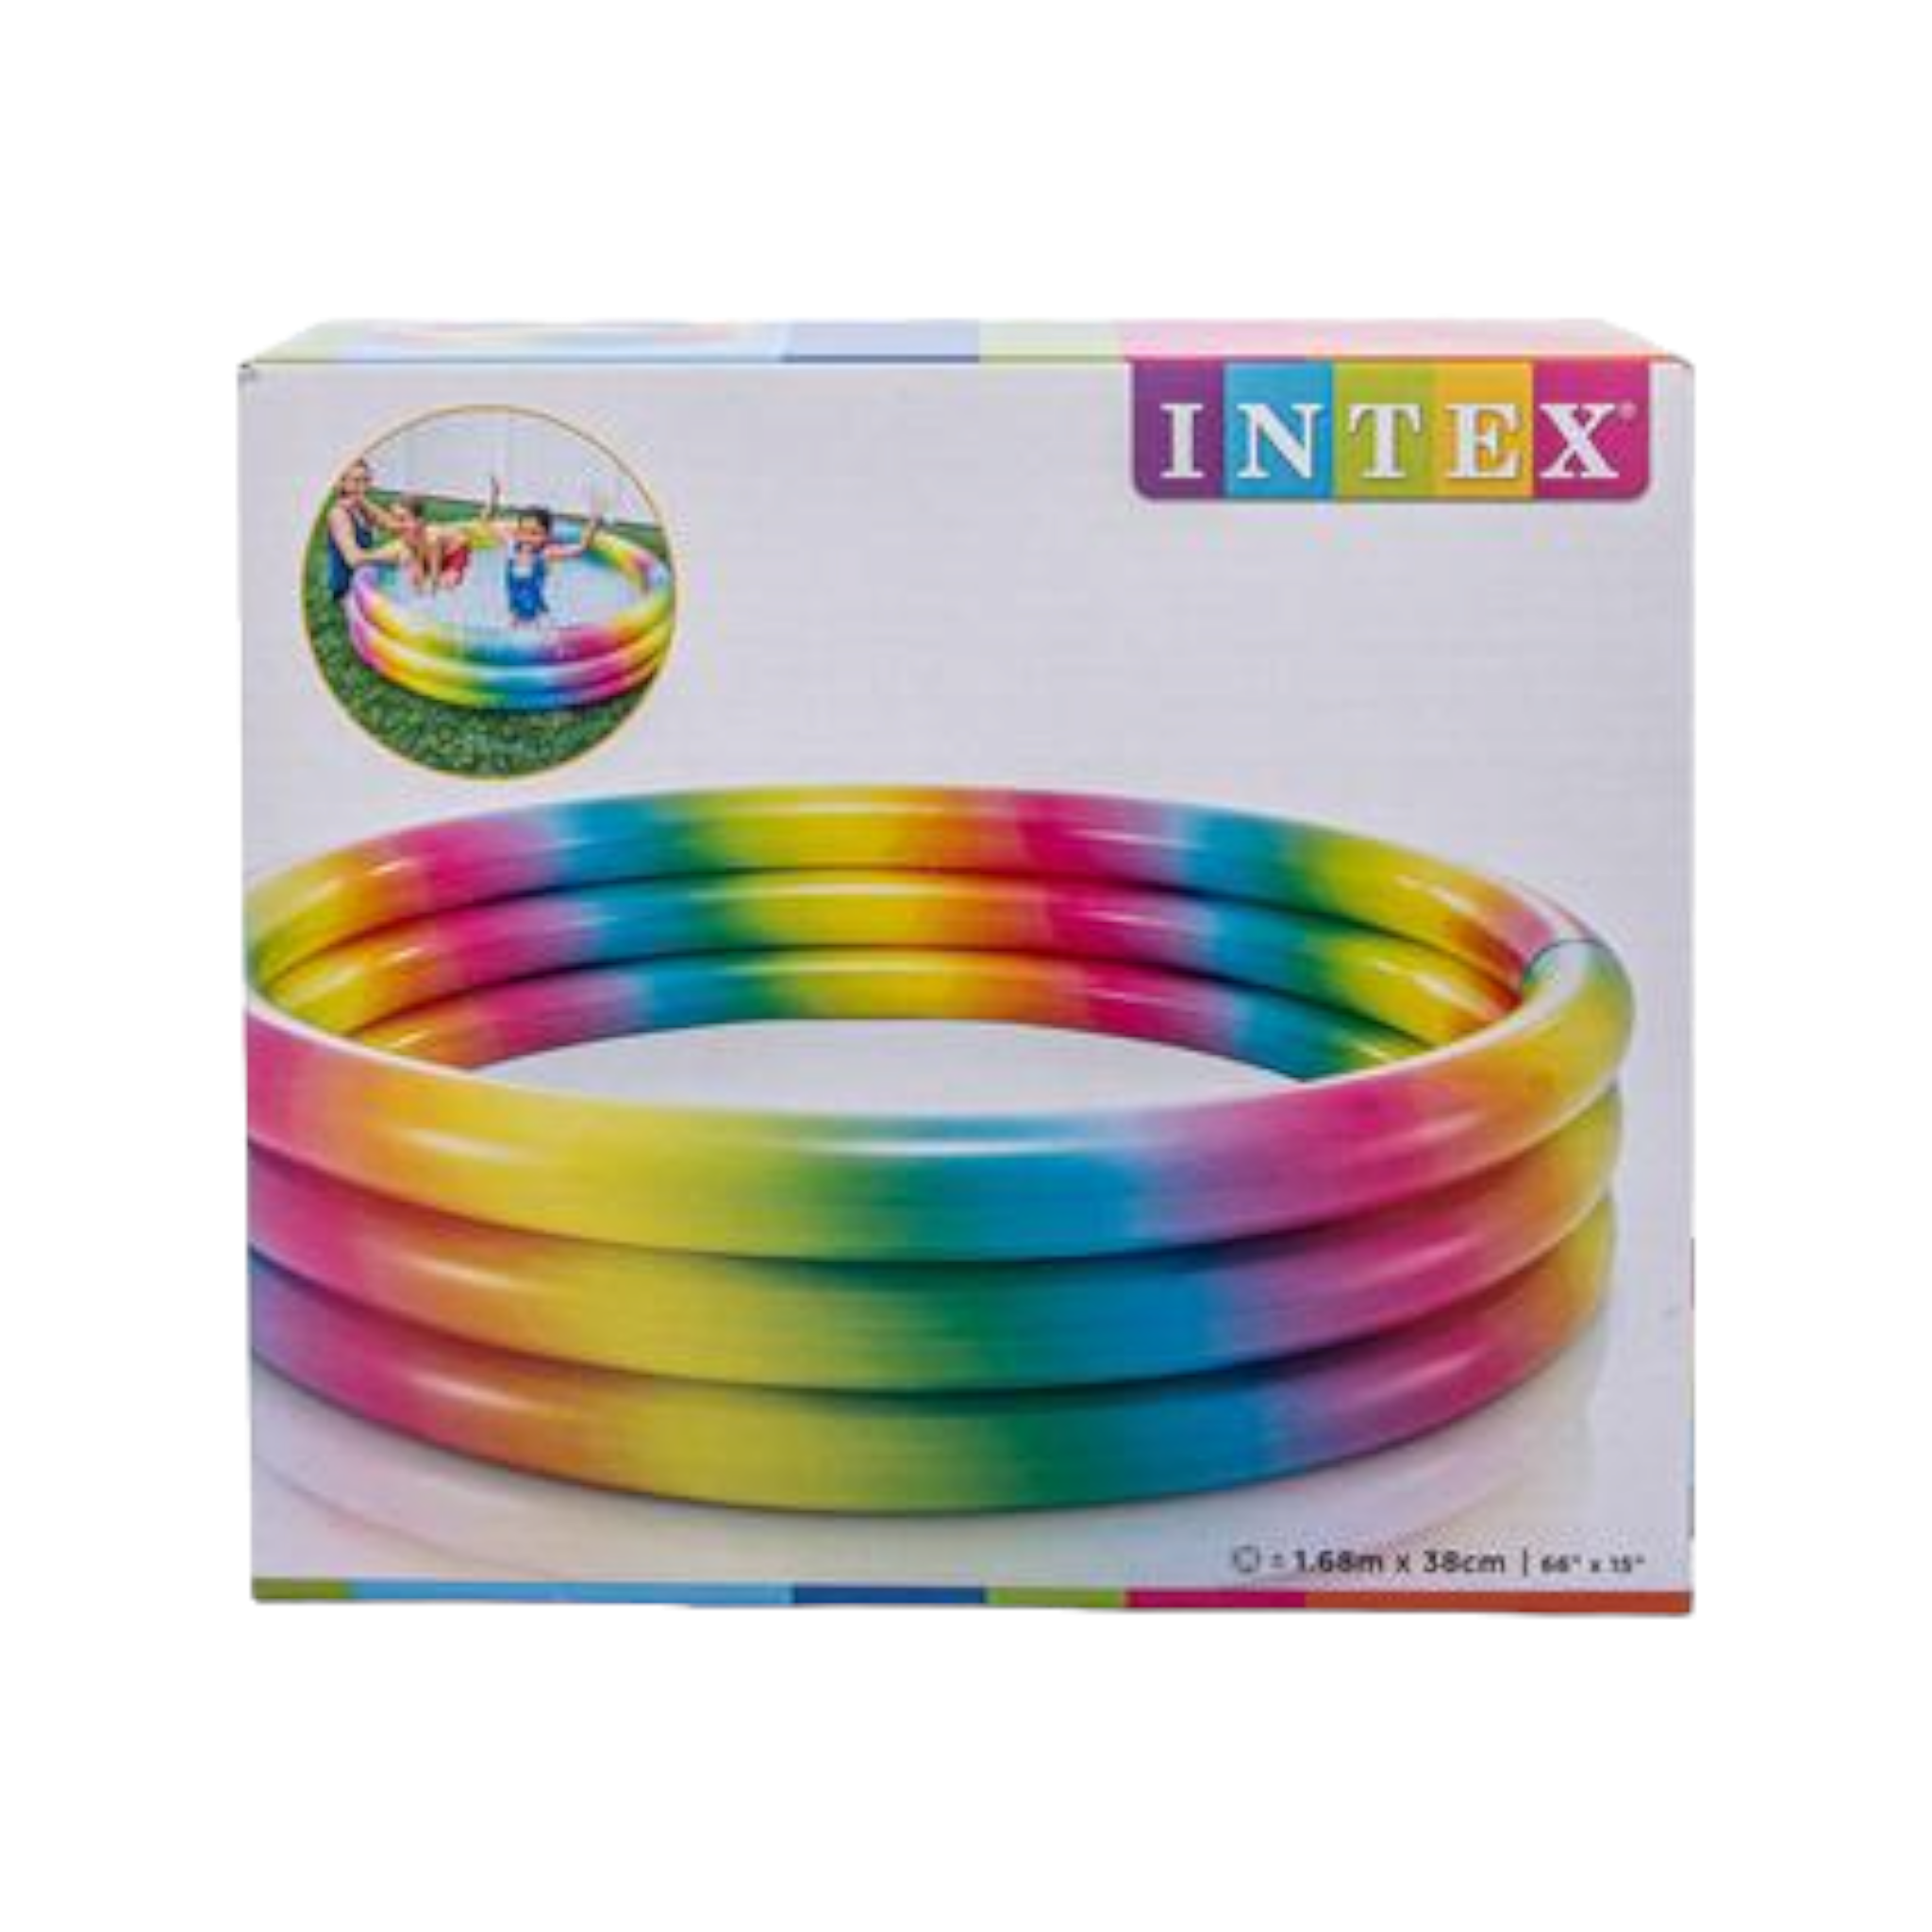 Intex Rainbow Pool Omber 3 Ring 168X38cm